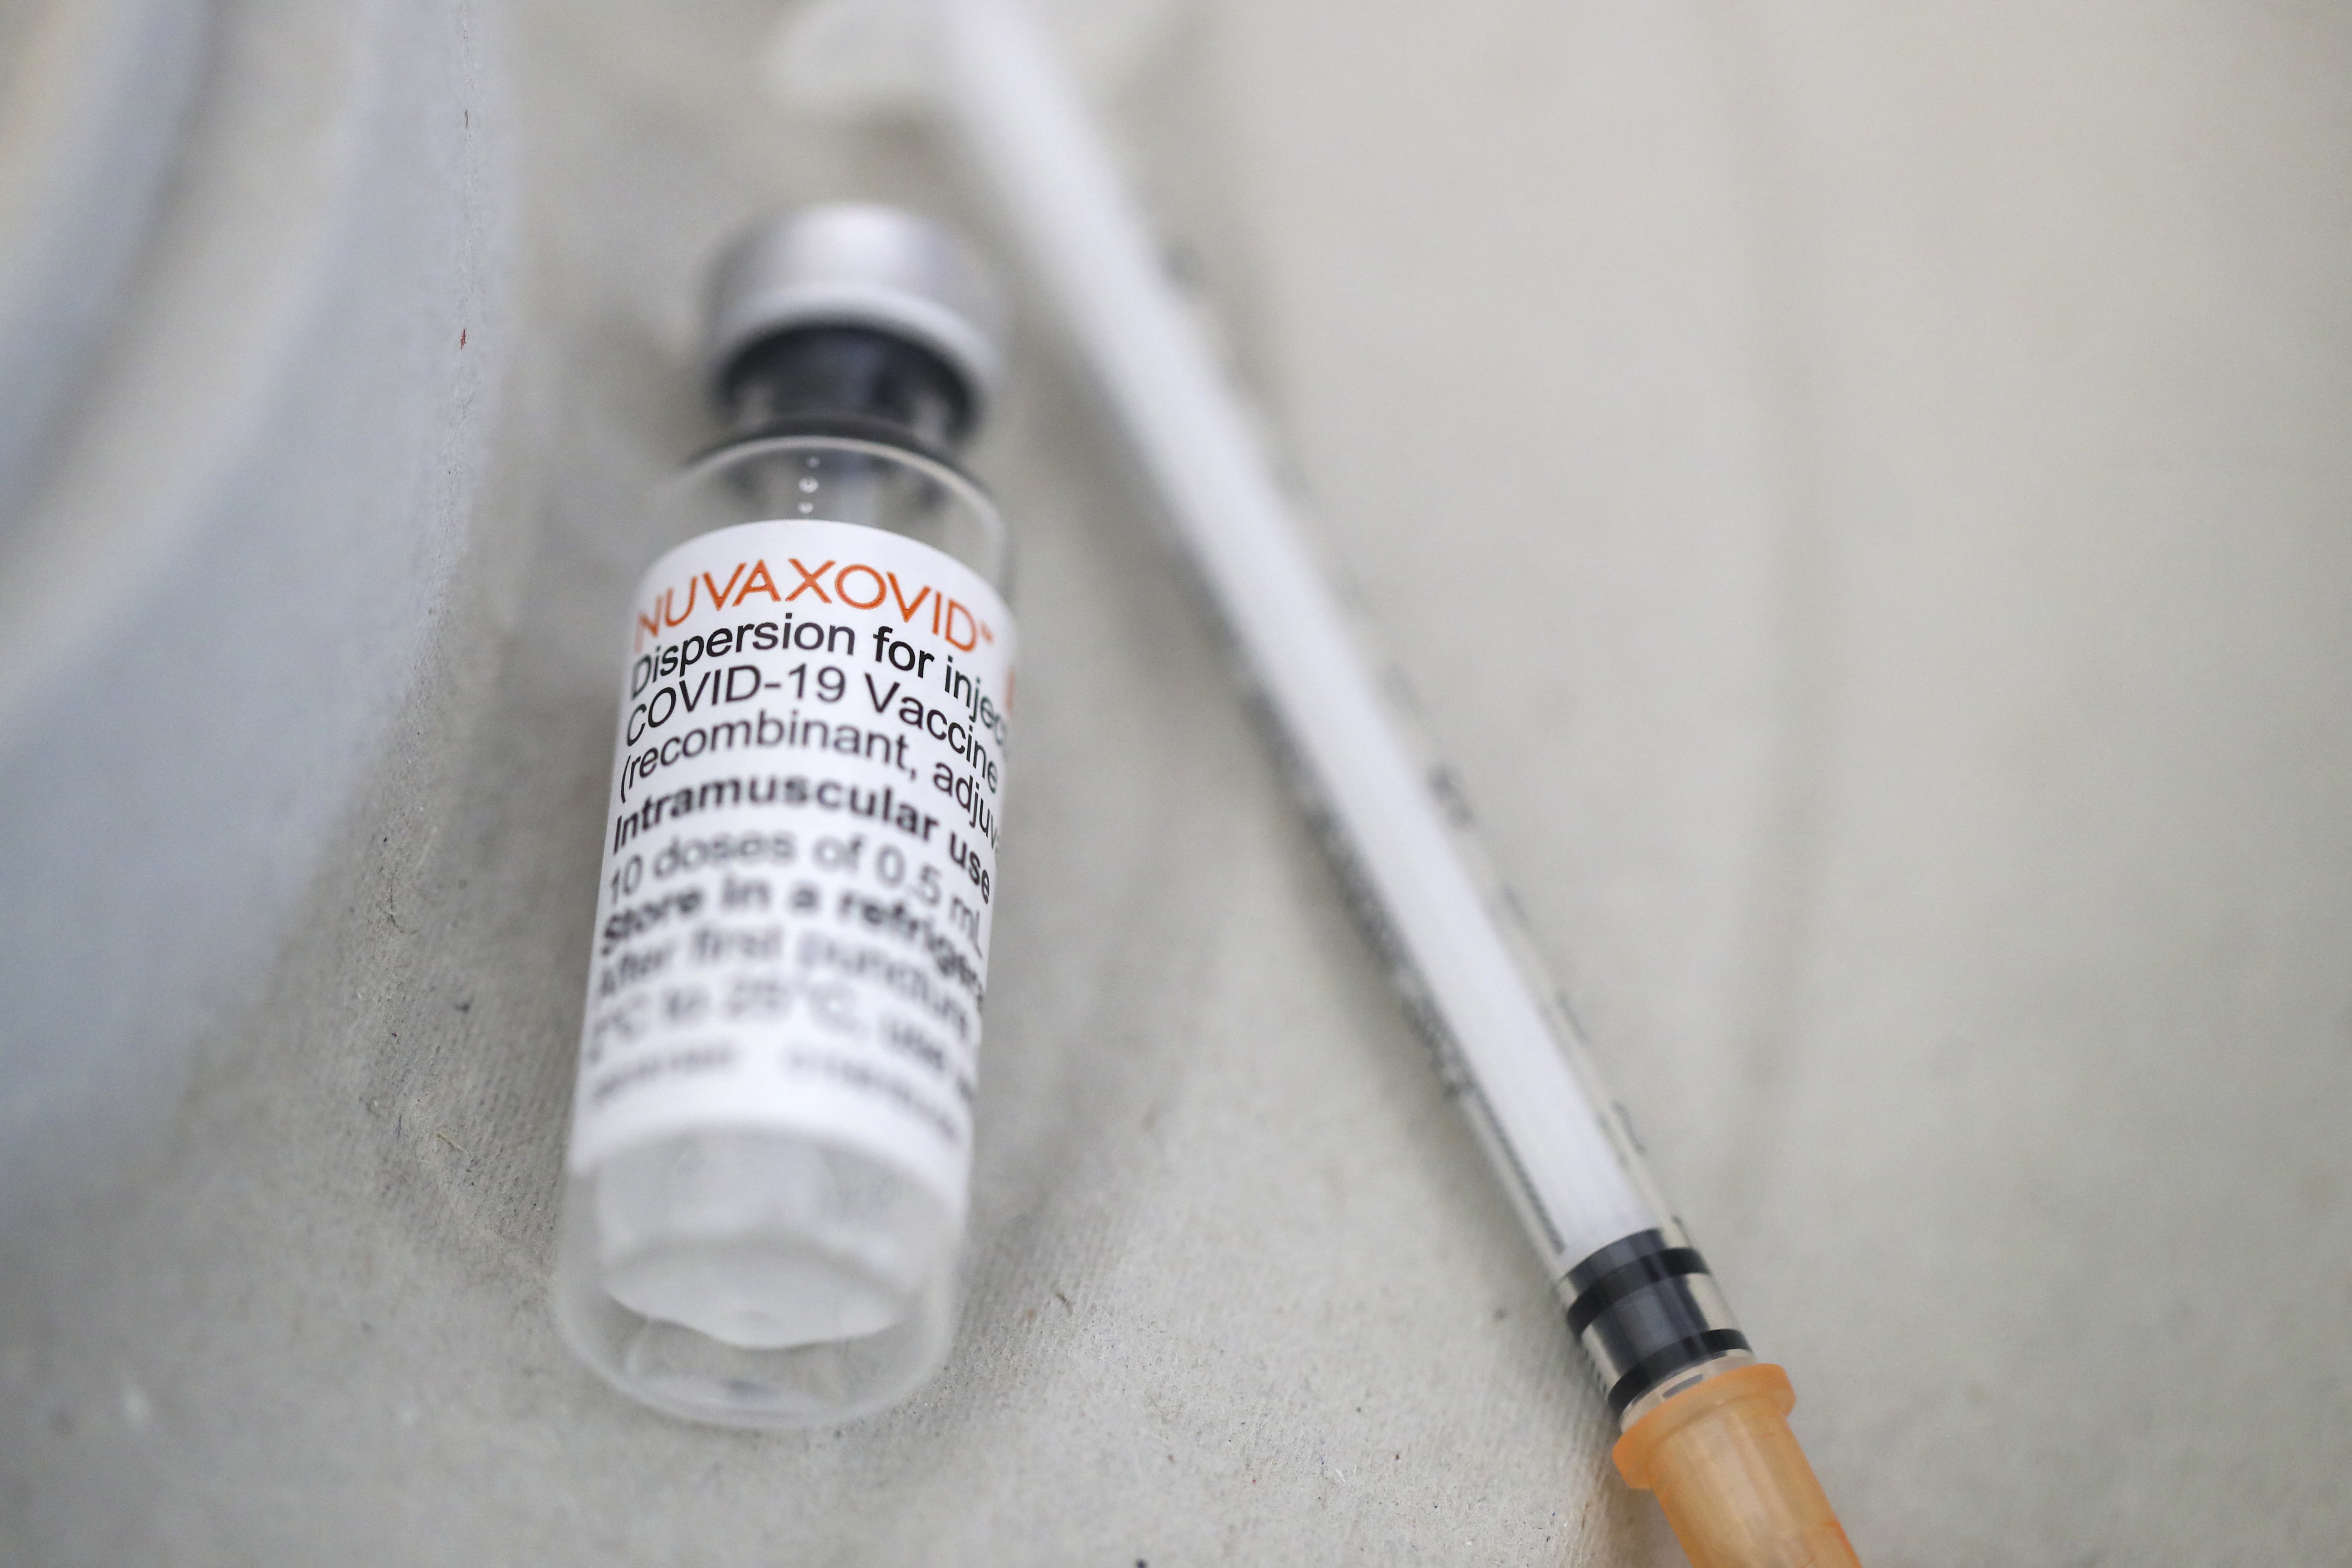 Novavax vaccin eiwitvaccin